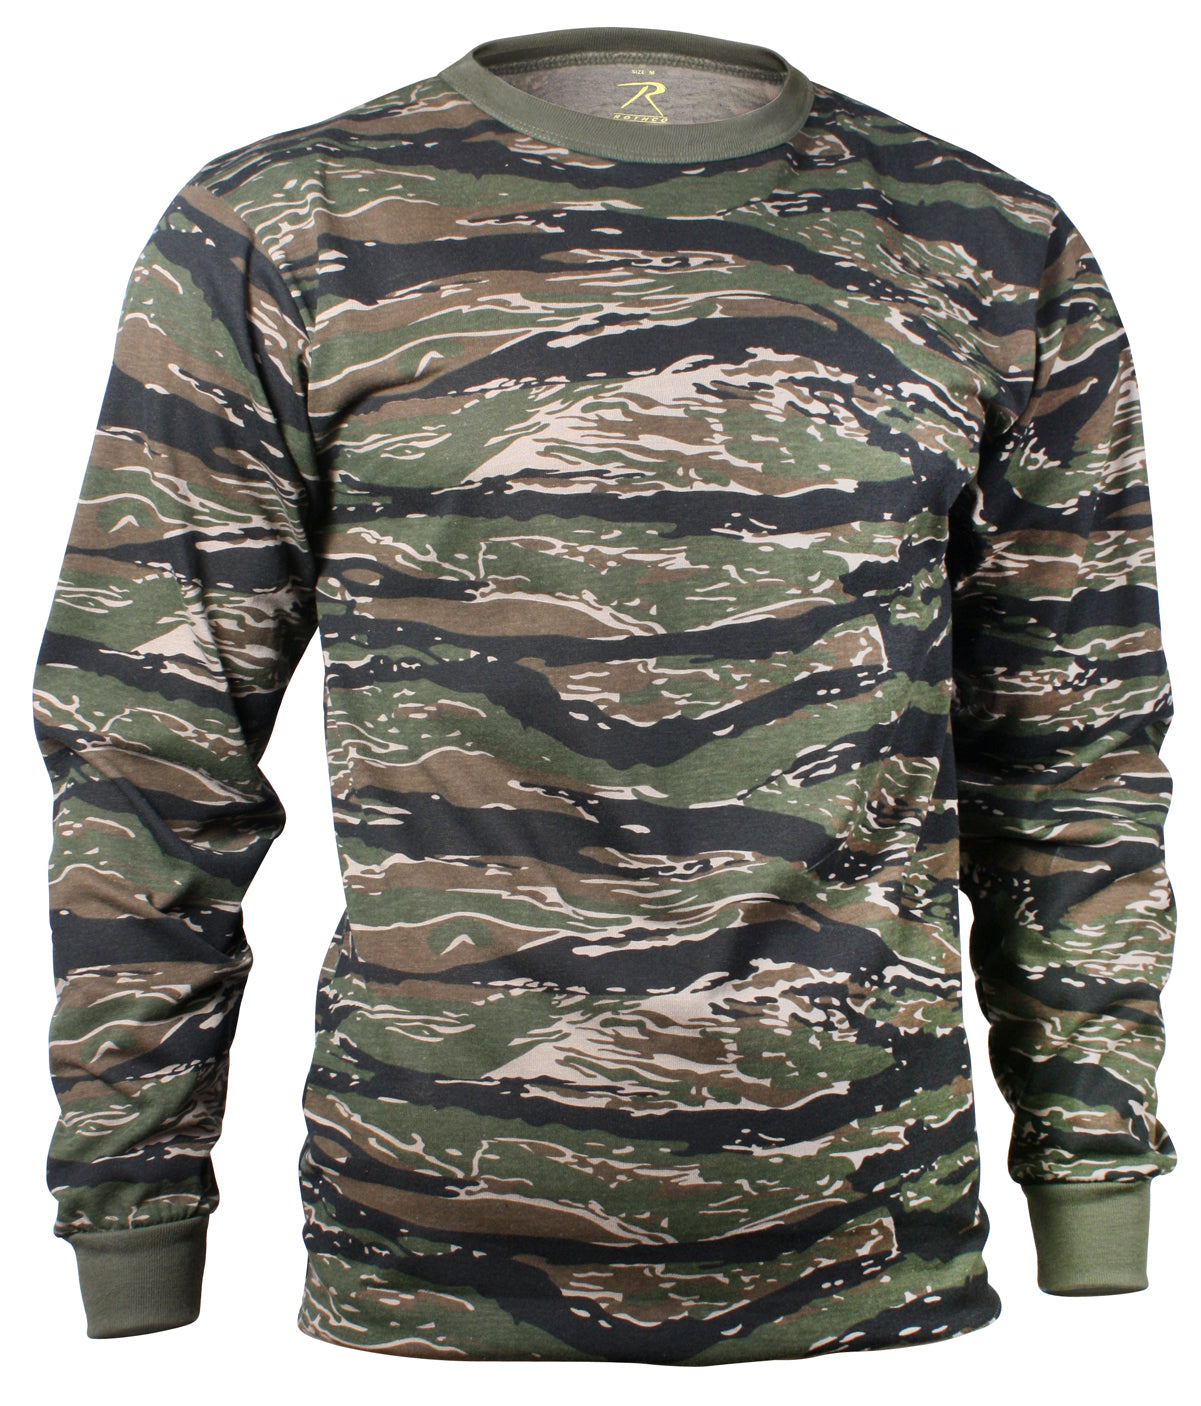 Milspec Long Sleeve Camo T-Shirt Camo T-Shirts MilTac Tactical Military Outdoor Gear Australia